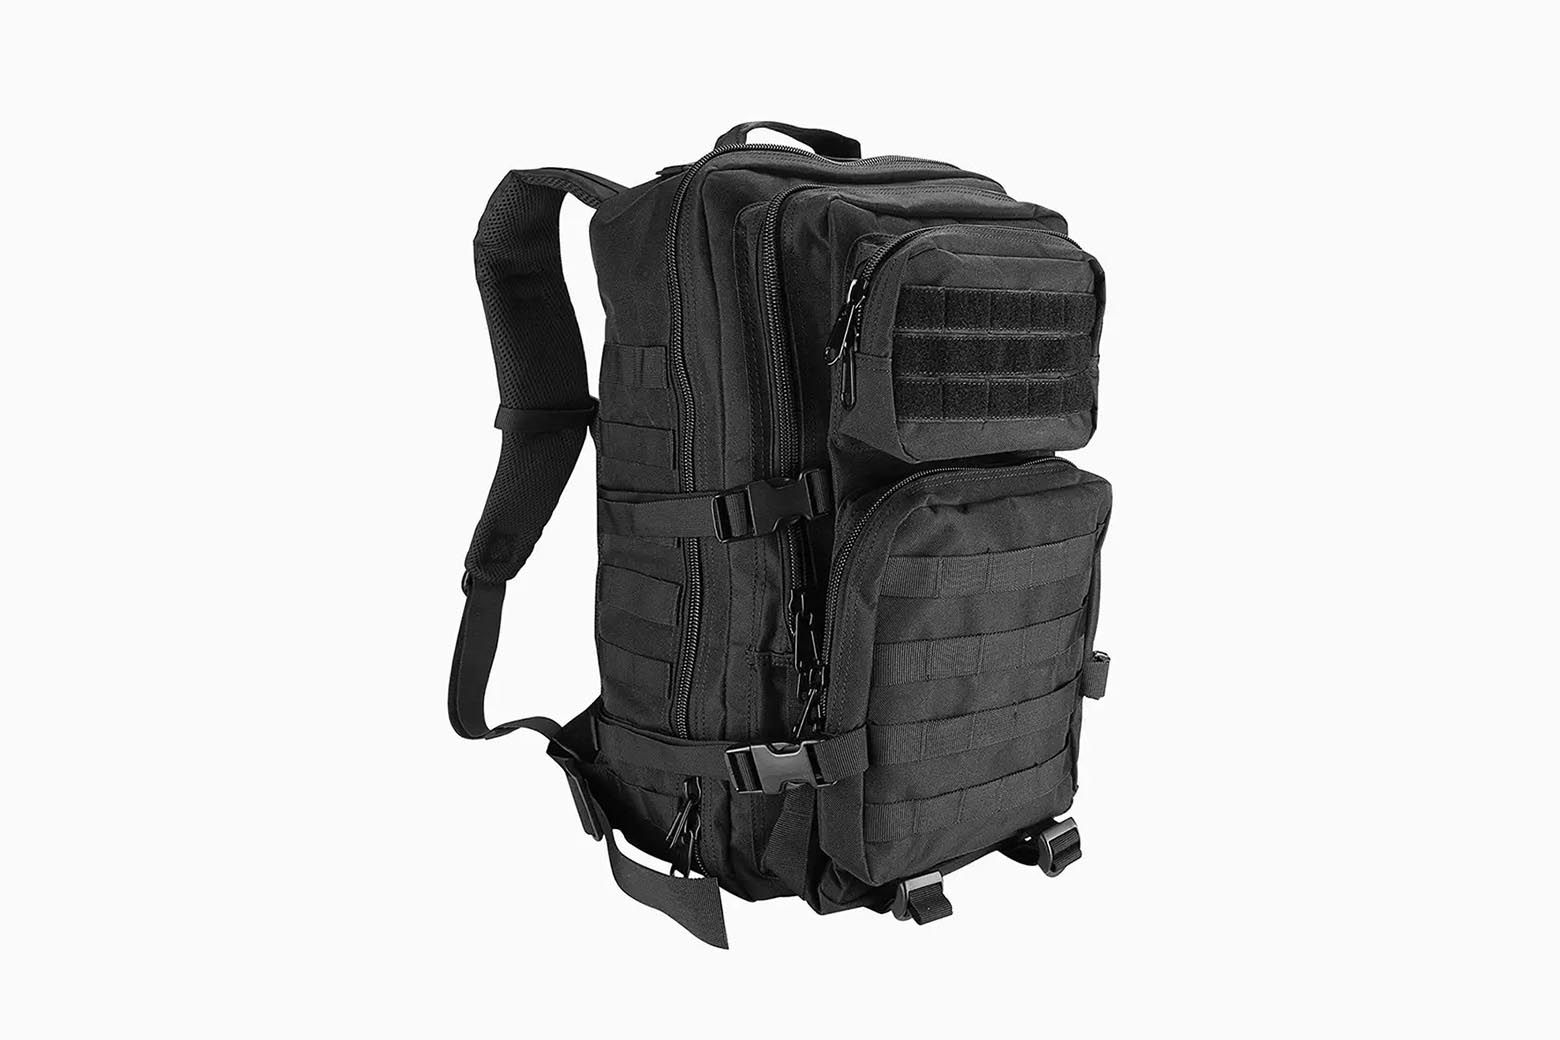 15 Best Tactical Backpacks: Top Urban & Outdoor Bags (Guide)